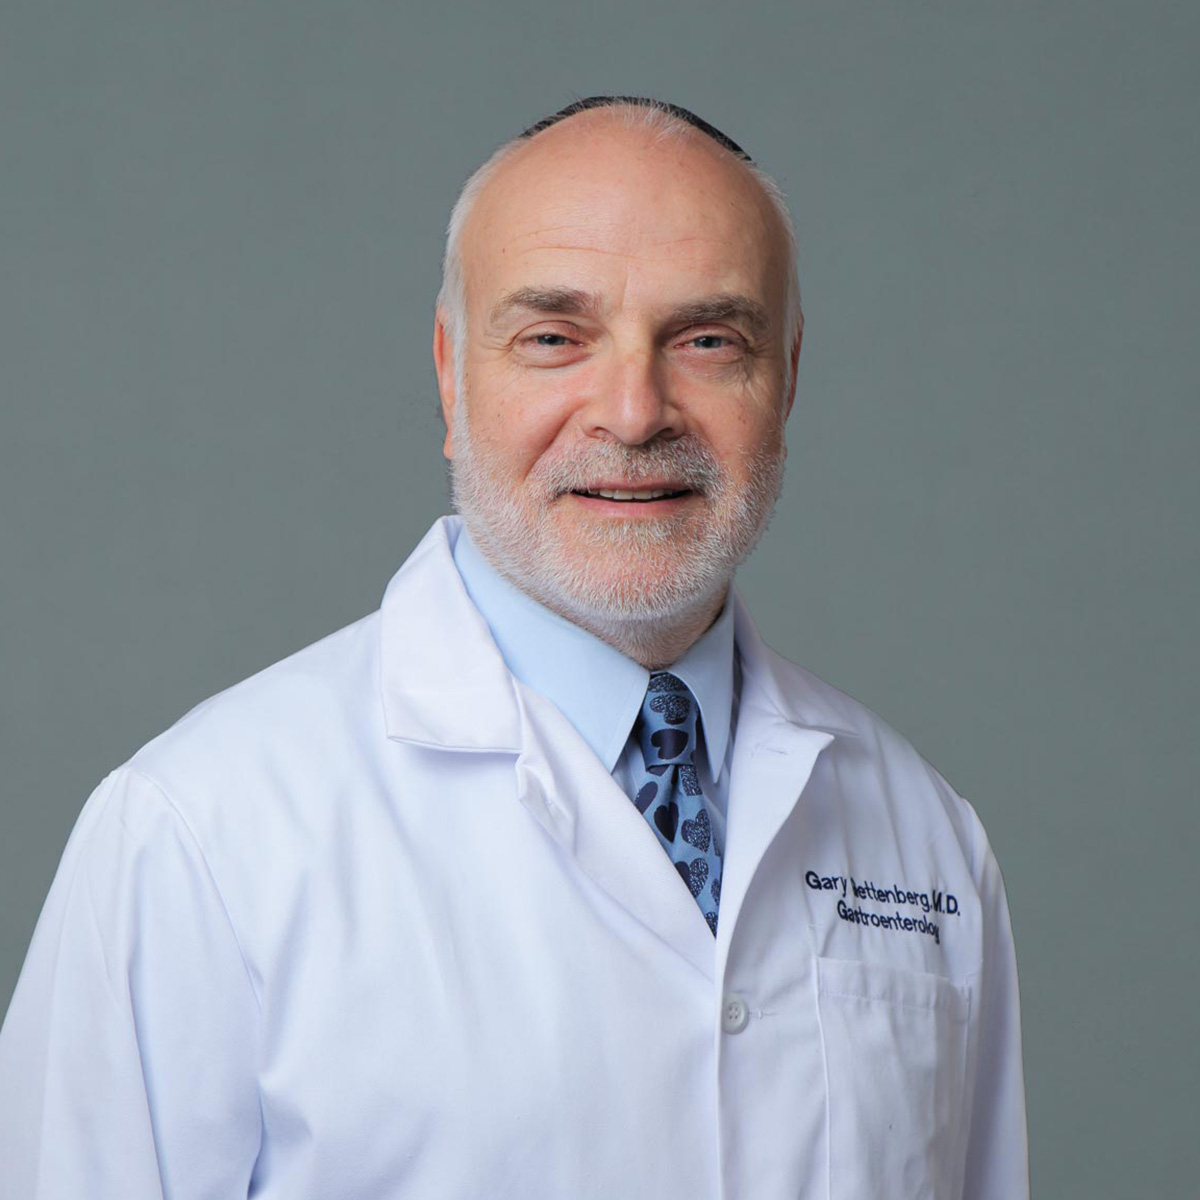 Gary Gettenberg,MD. Gastroenterology